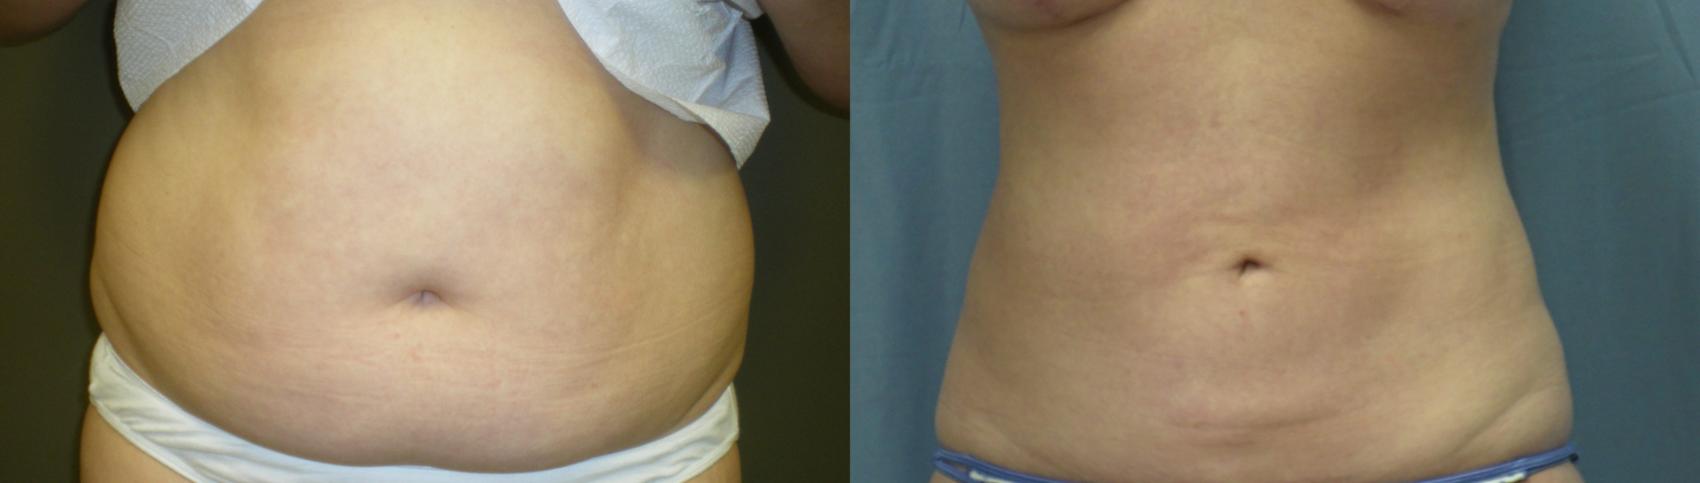 Asymmetrical Breasts - Atlanta Liposuction Specialty Clinic